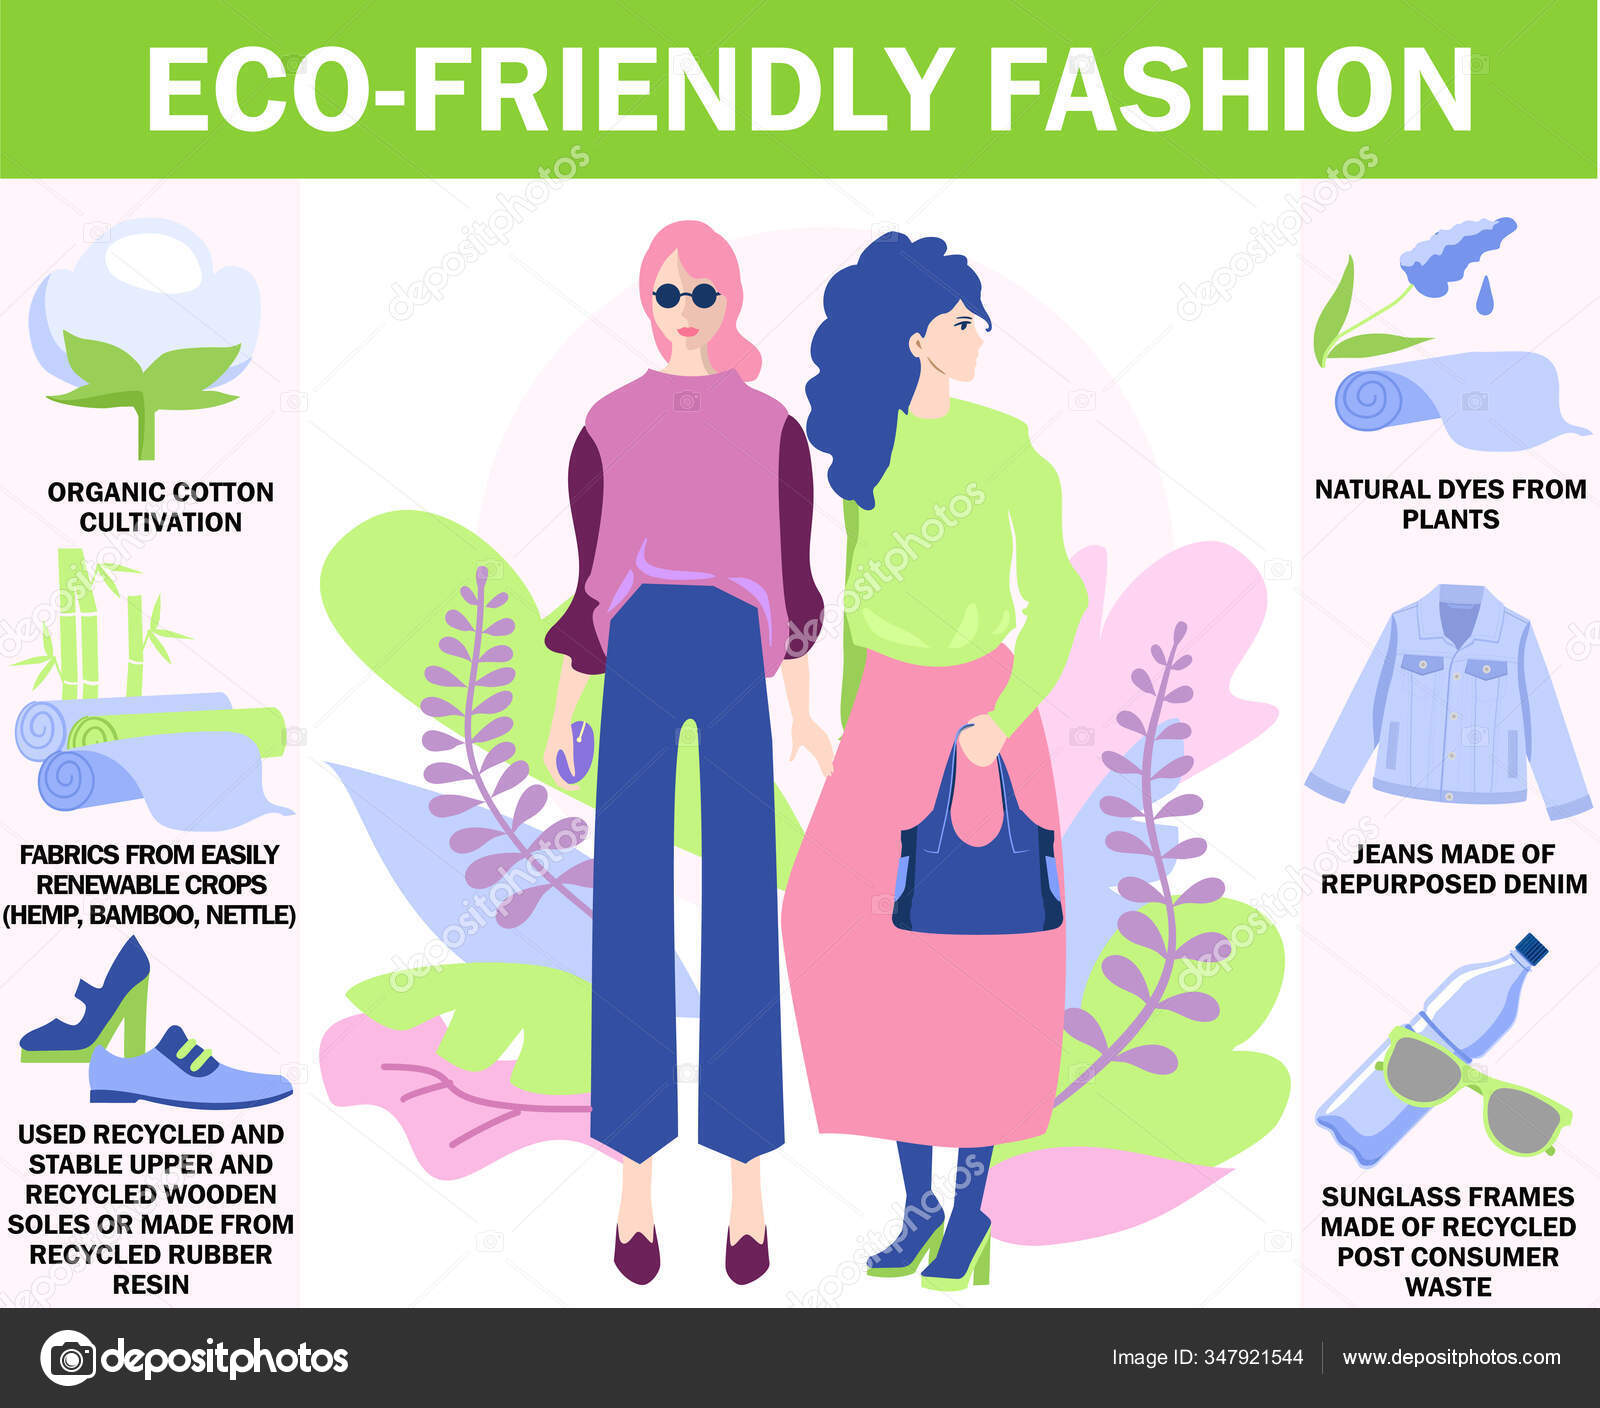 eco fashion